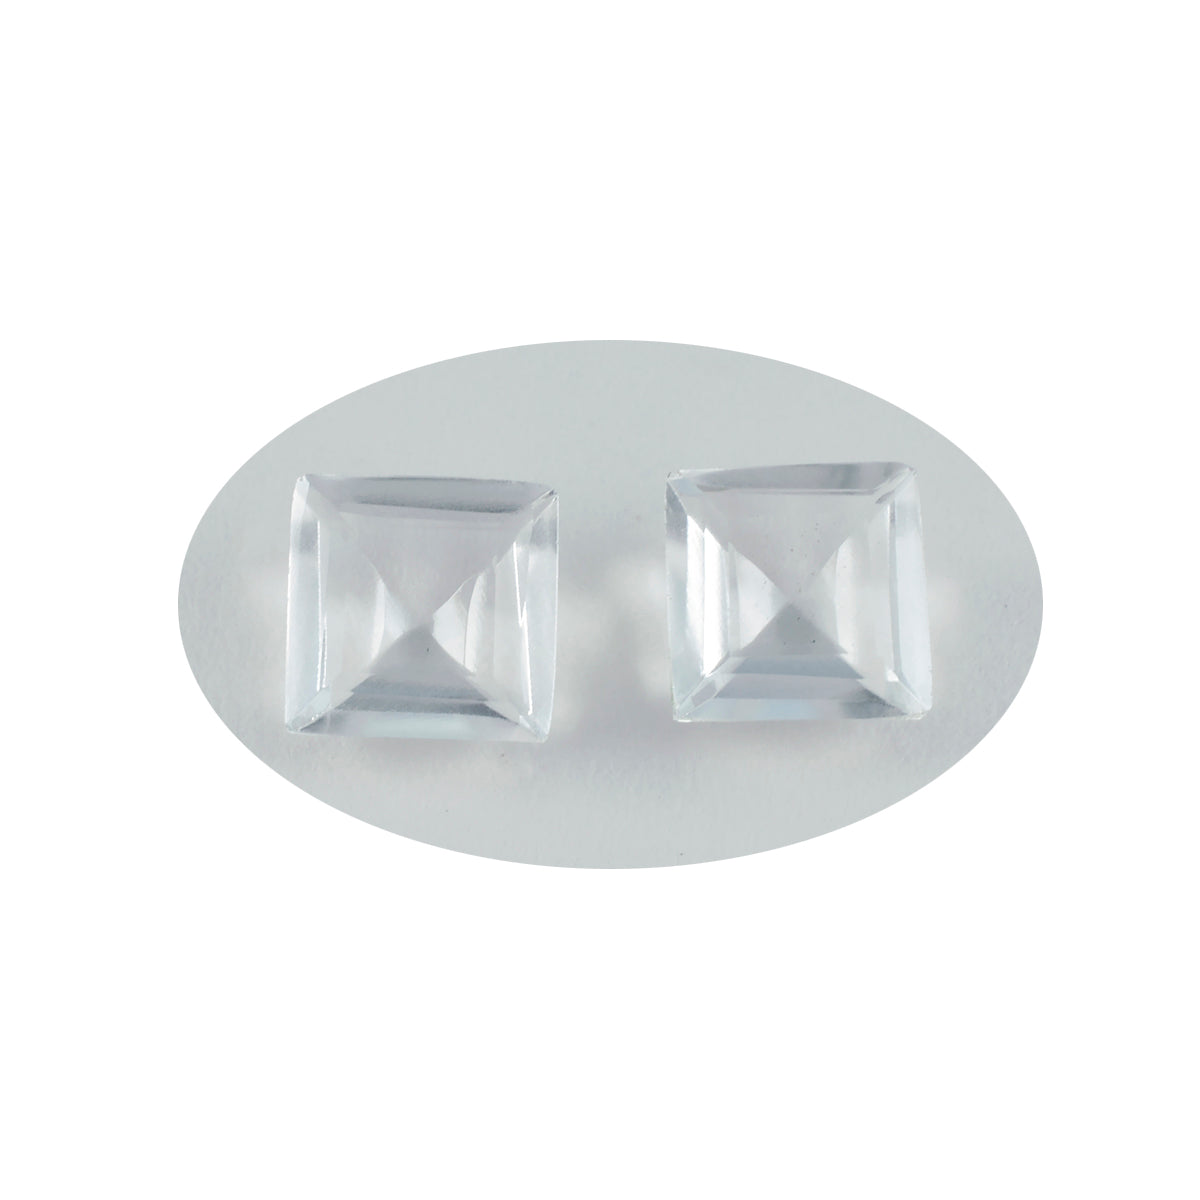 riyogems 1pc ホワイト クリスタル クォーツ ファセット 15x15 mm 正方形の形状の素晴らしい品質のルース宝石